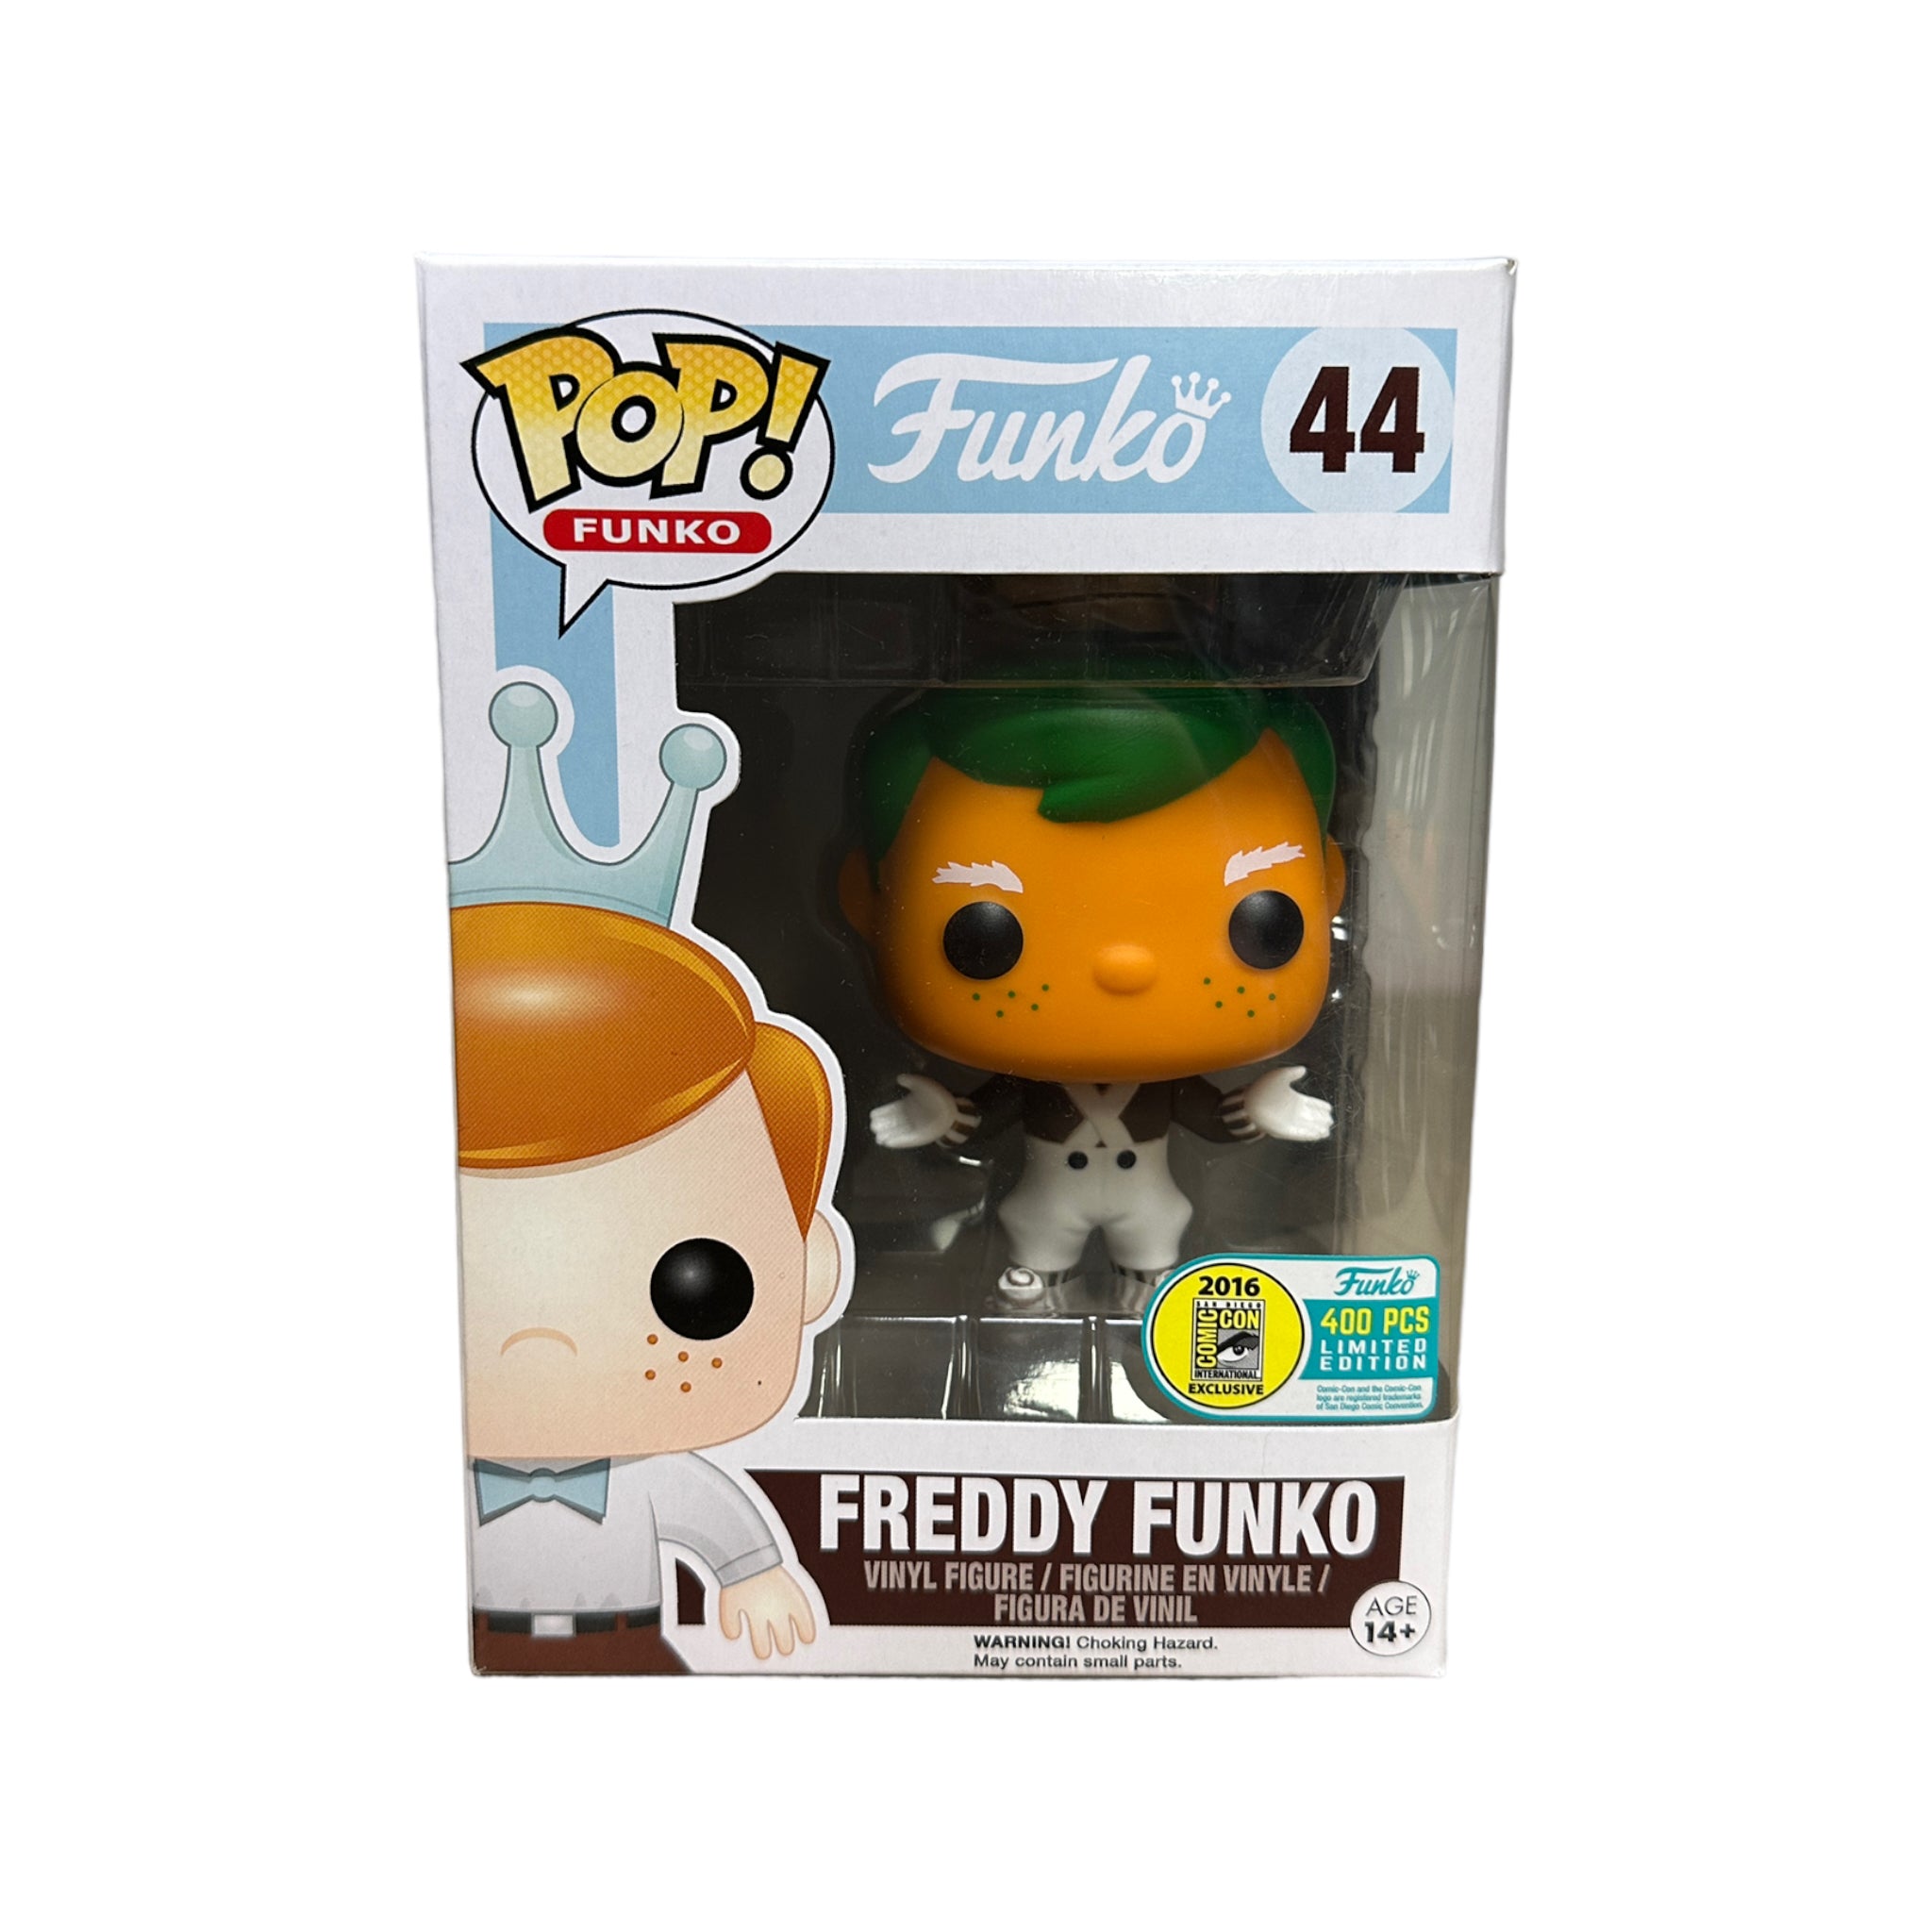 Freddy Funko as Oompa Loompa #44 Funko Pop! - SDCC 2016 Exclusive LE400 Pcs - Condition 8.5/10